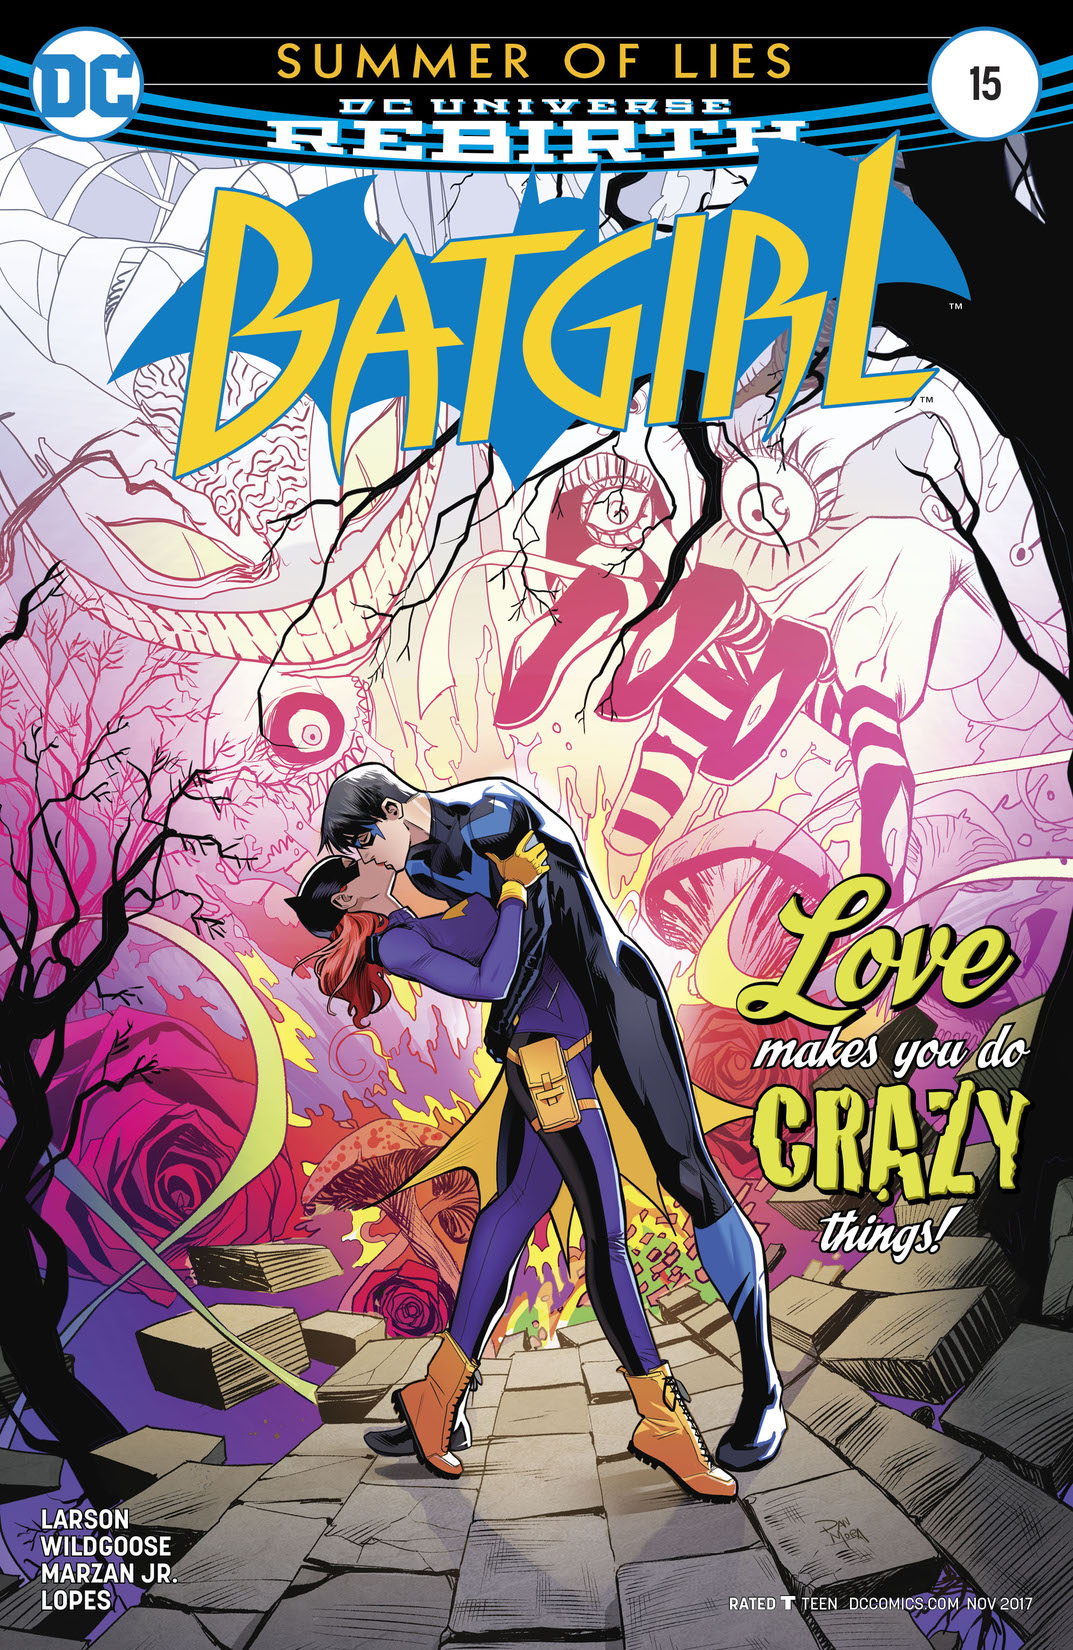 Batgirl (2016-) #15 preview images